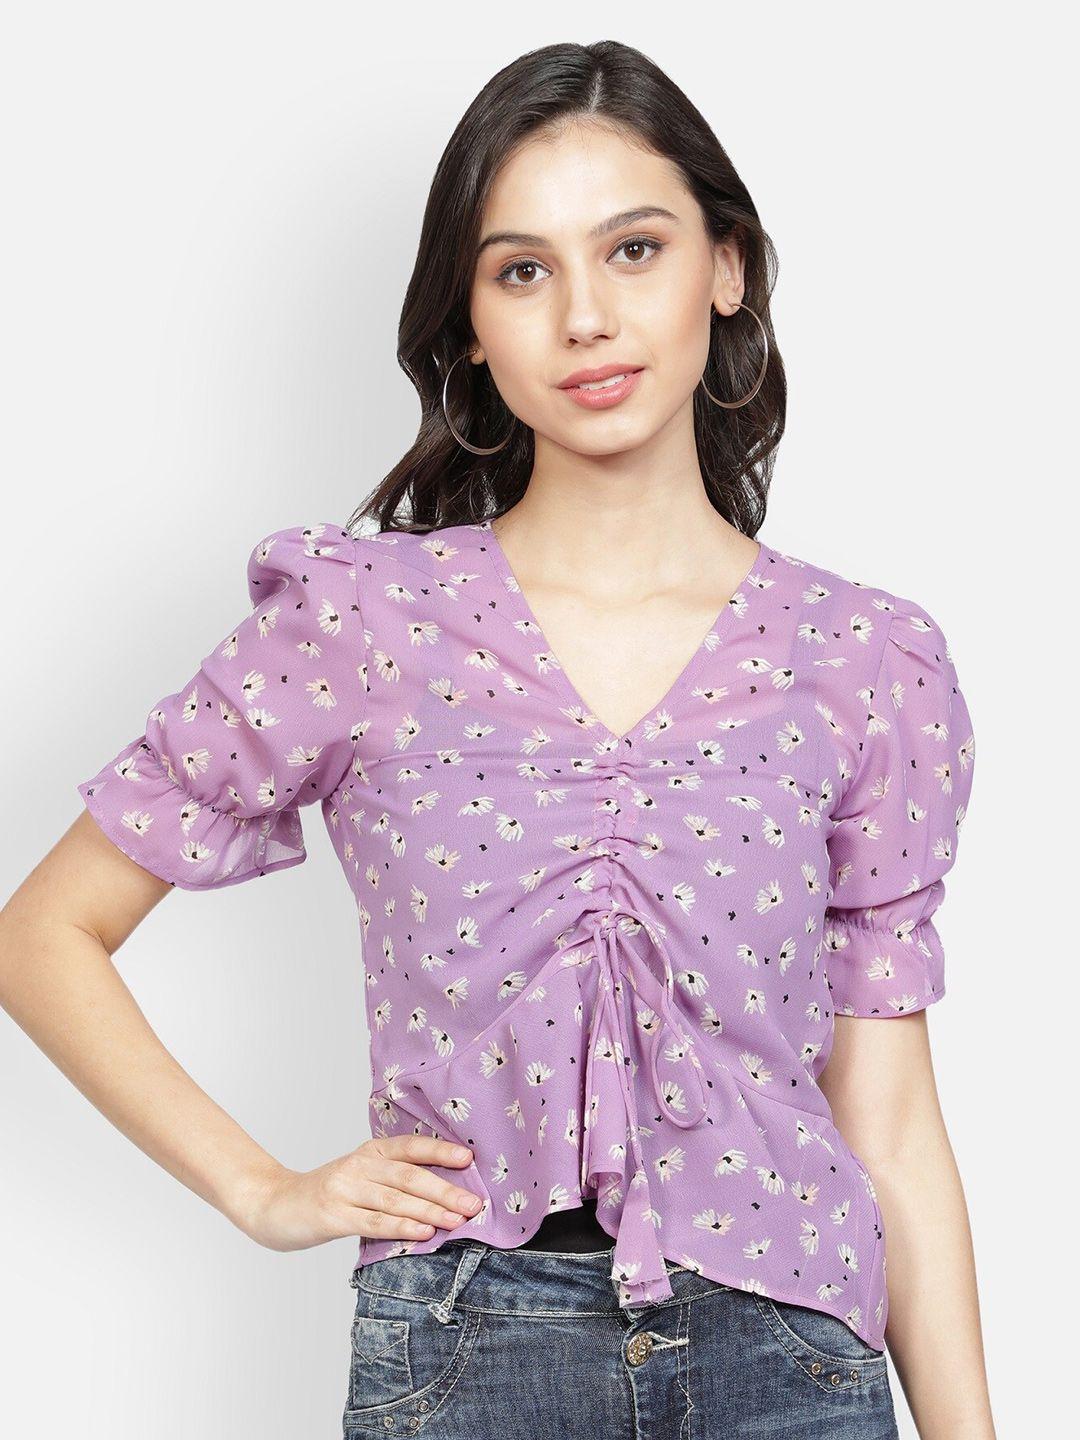 sipsew-women-purple-&-white-floral-print-georgette-top